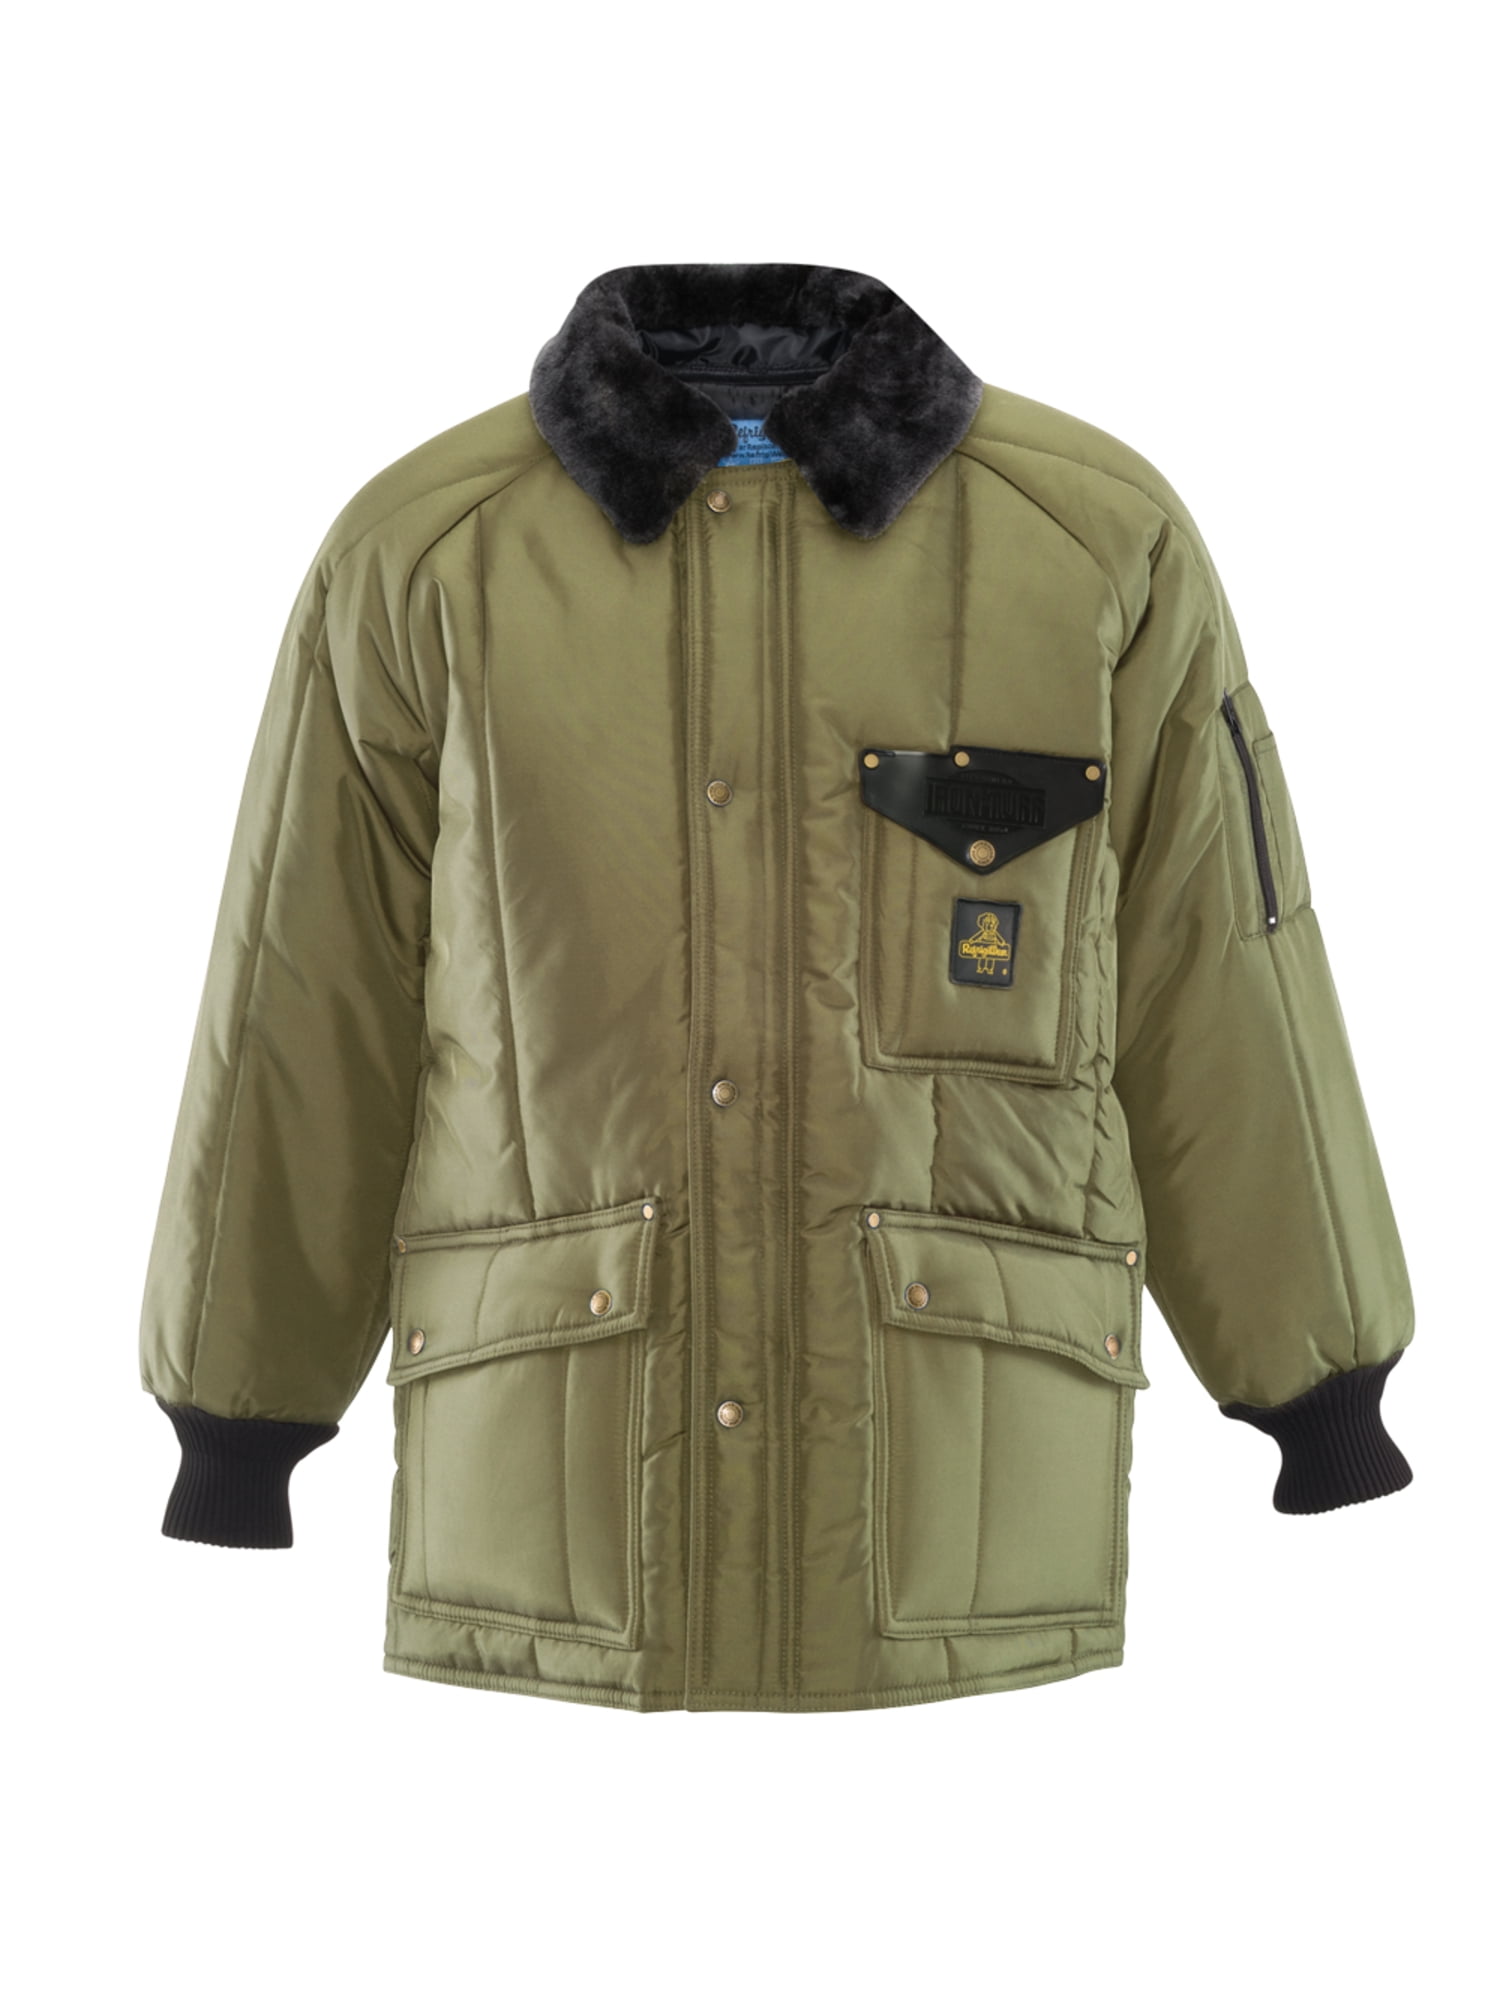 RefrigiWear Mens Insulated Iron-Tuff Siberian Workwear Jacket with